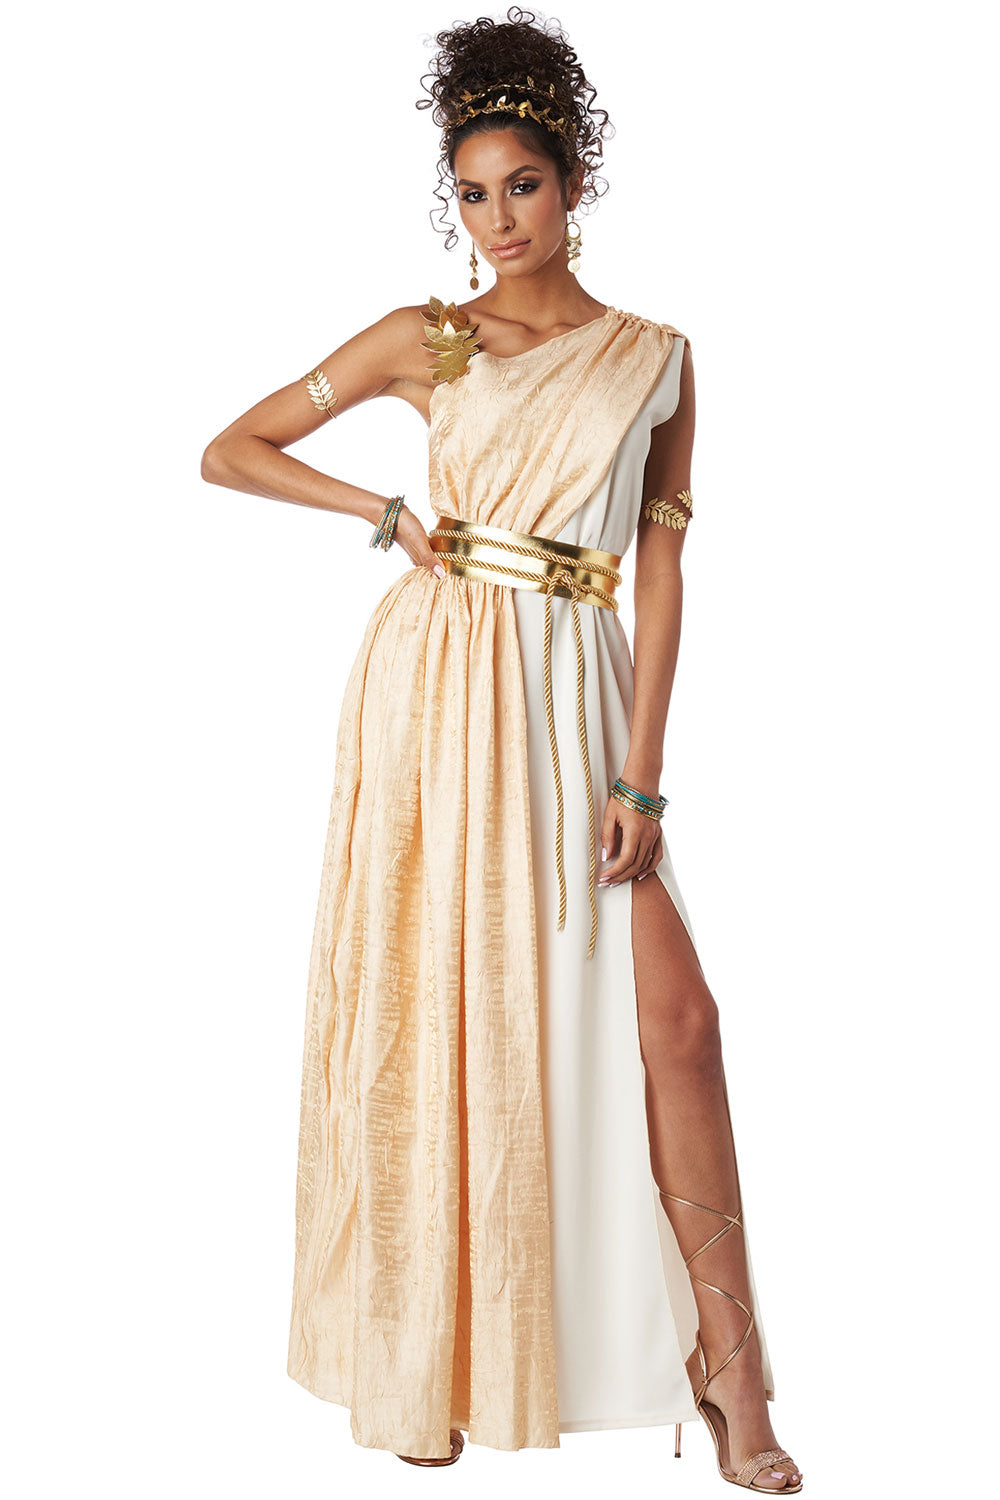 Golden Goddess / Adult California Costume 5021-167